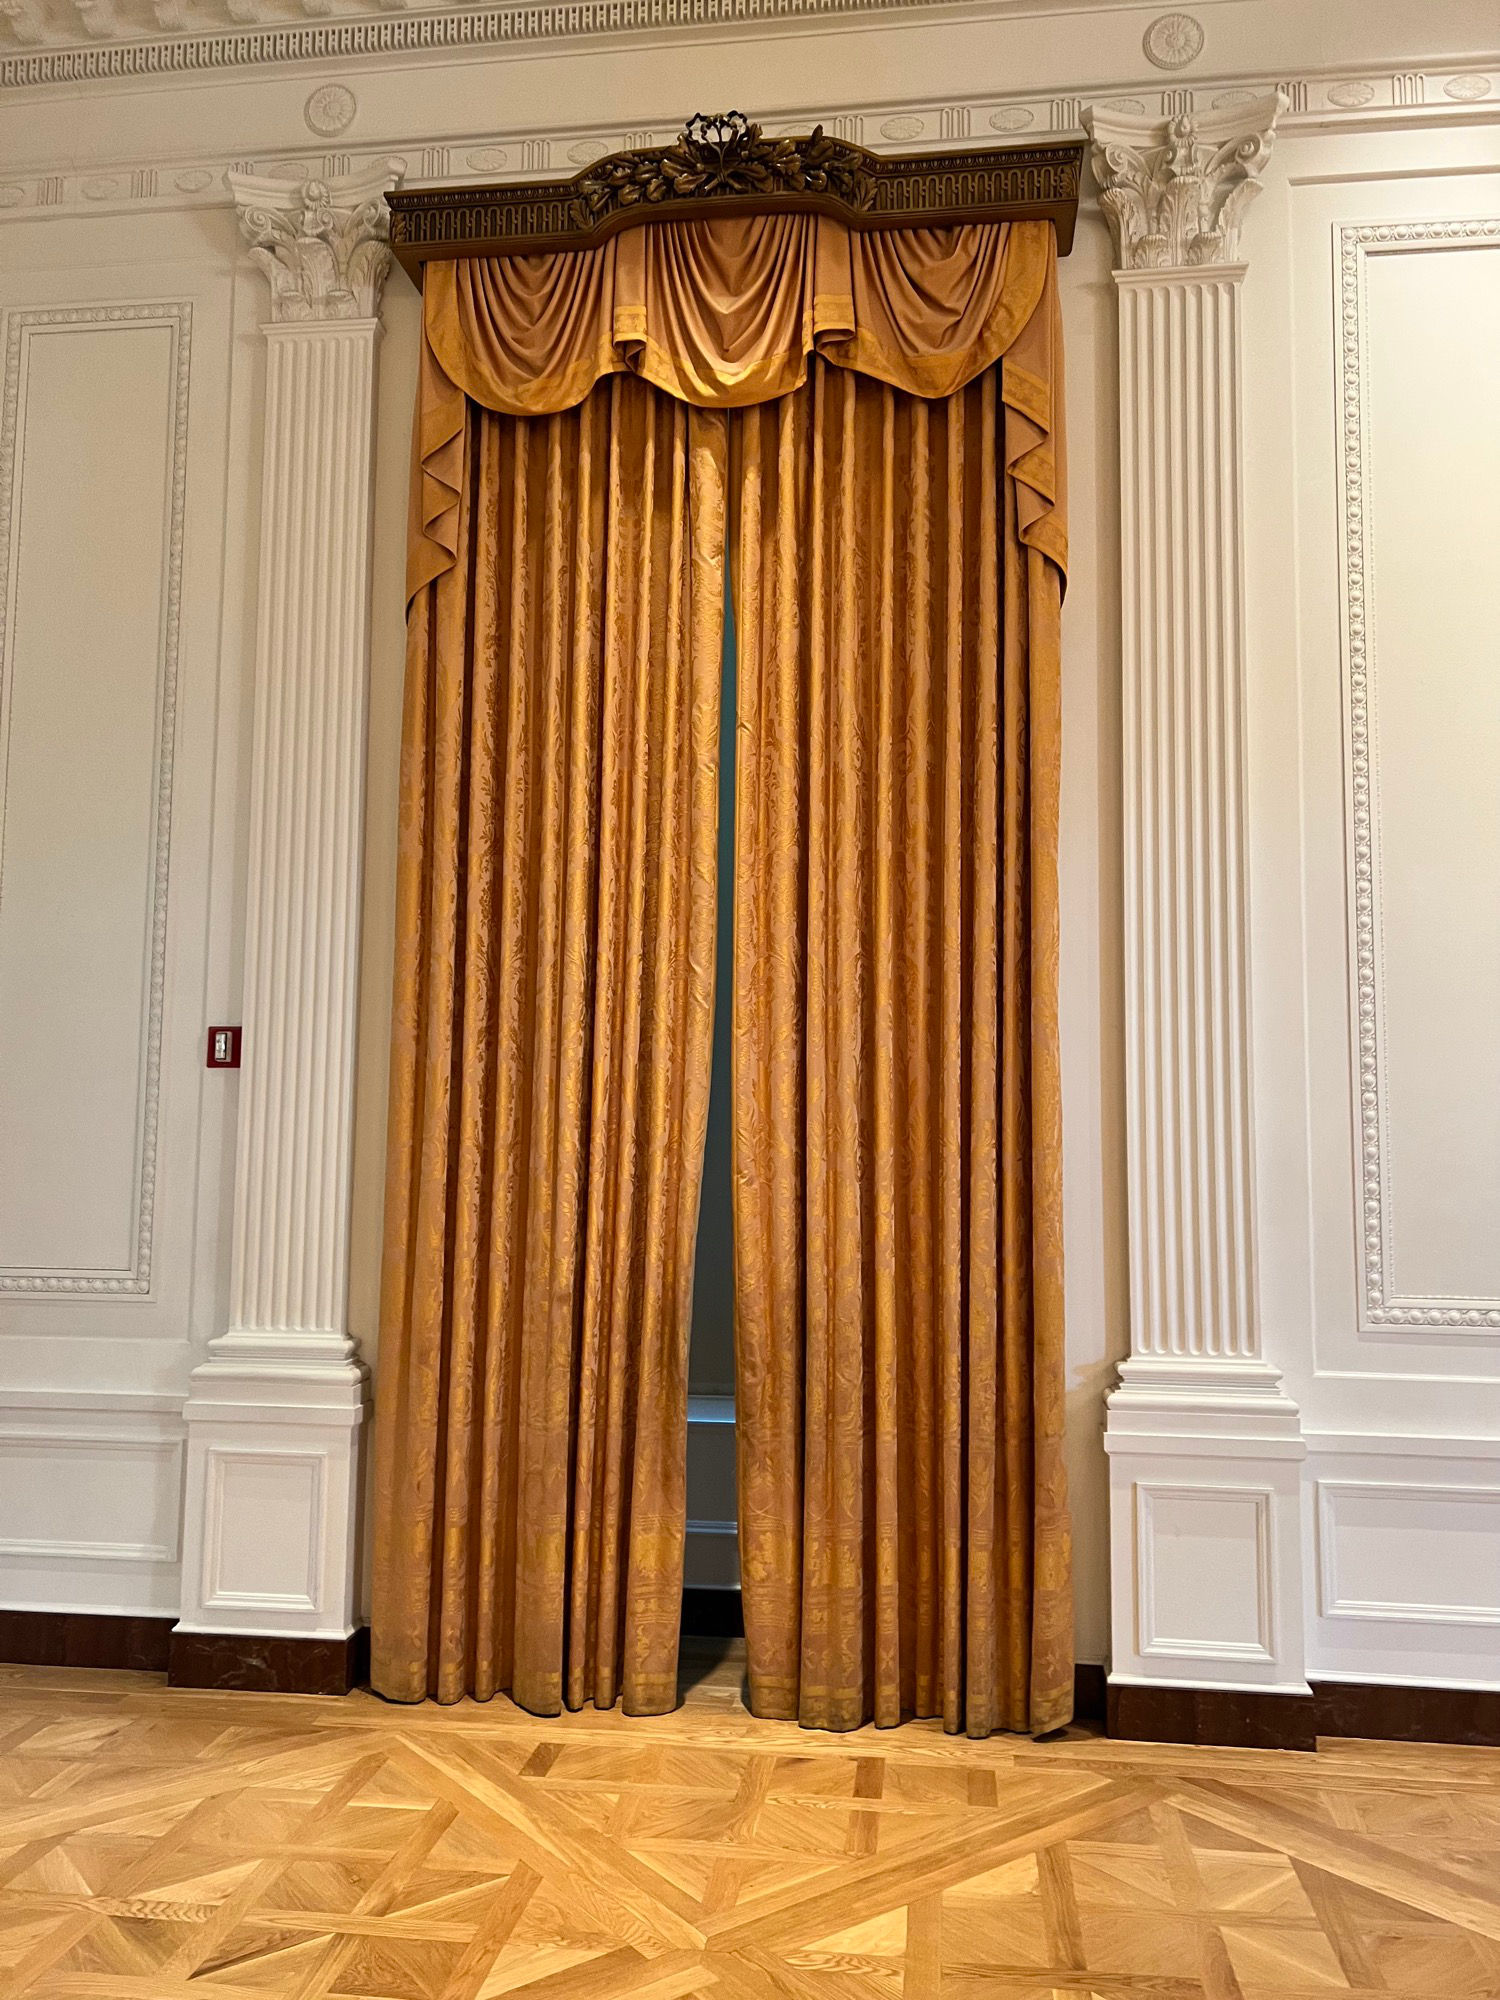 East Room Curtain